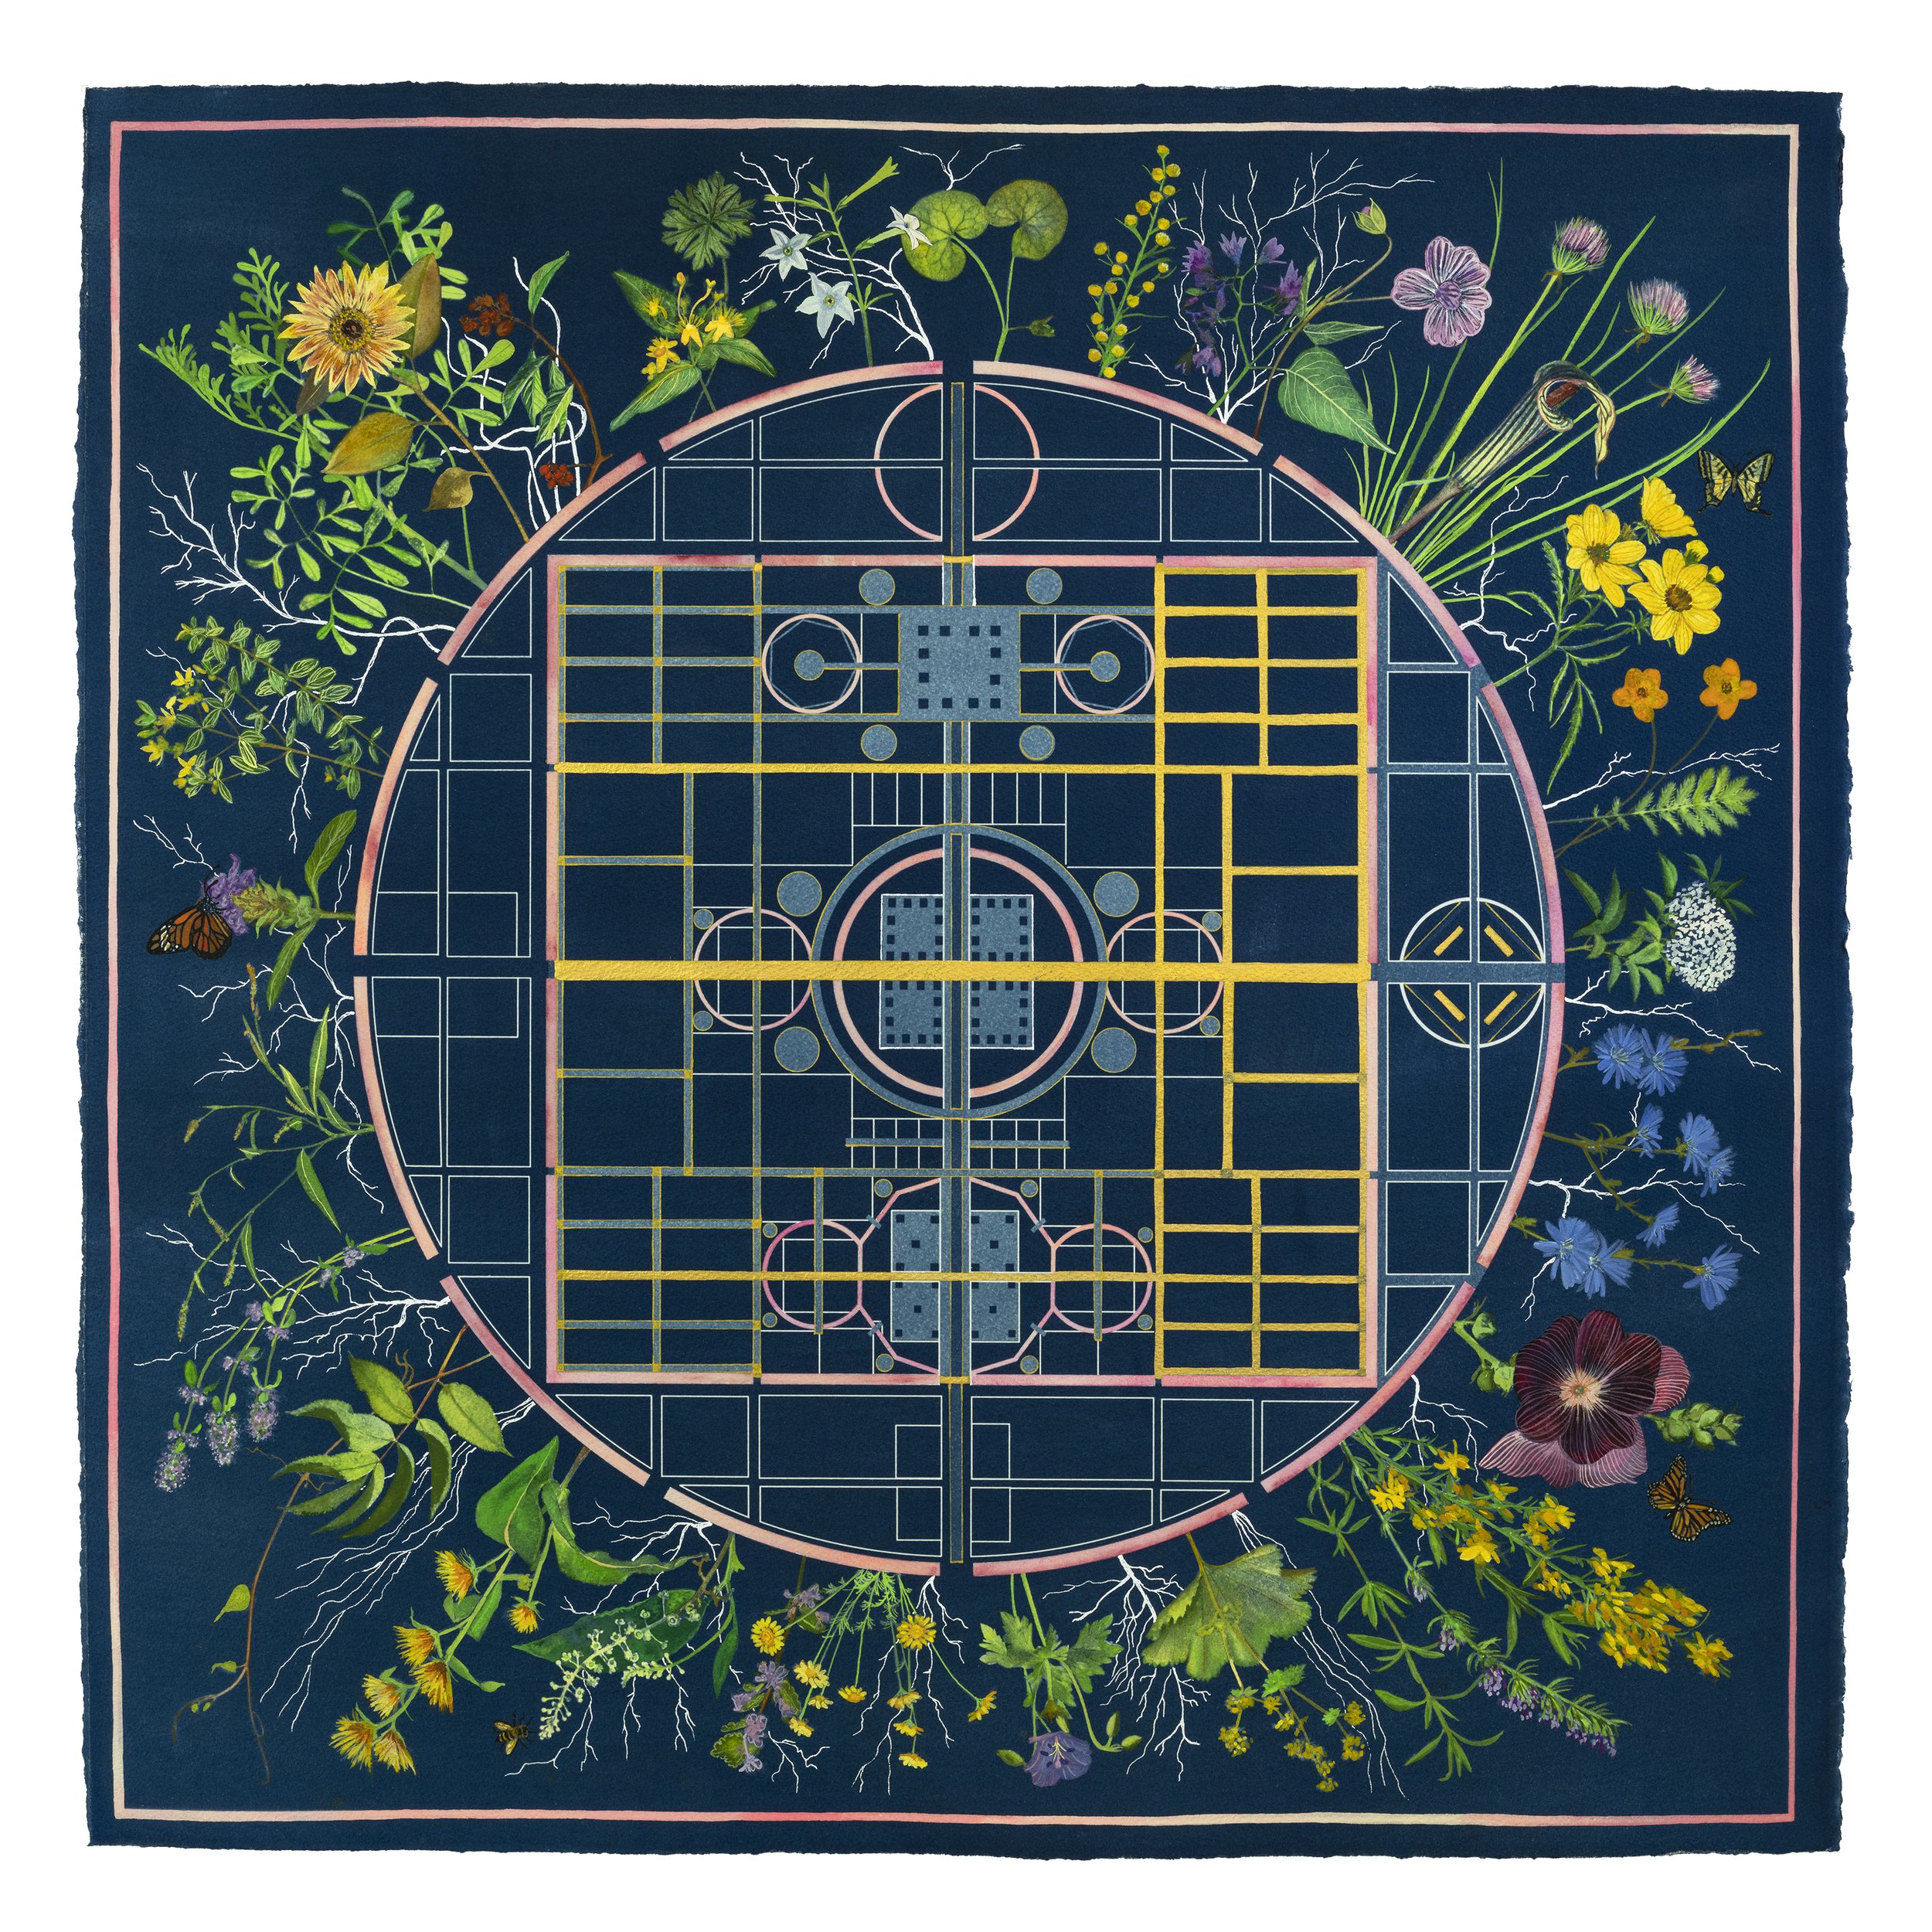 Planting Utopia (Flower Map)